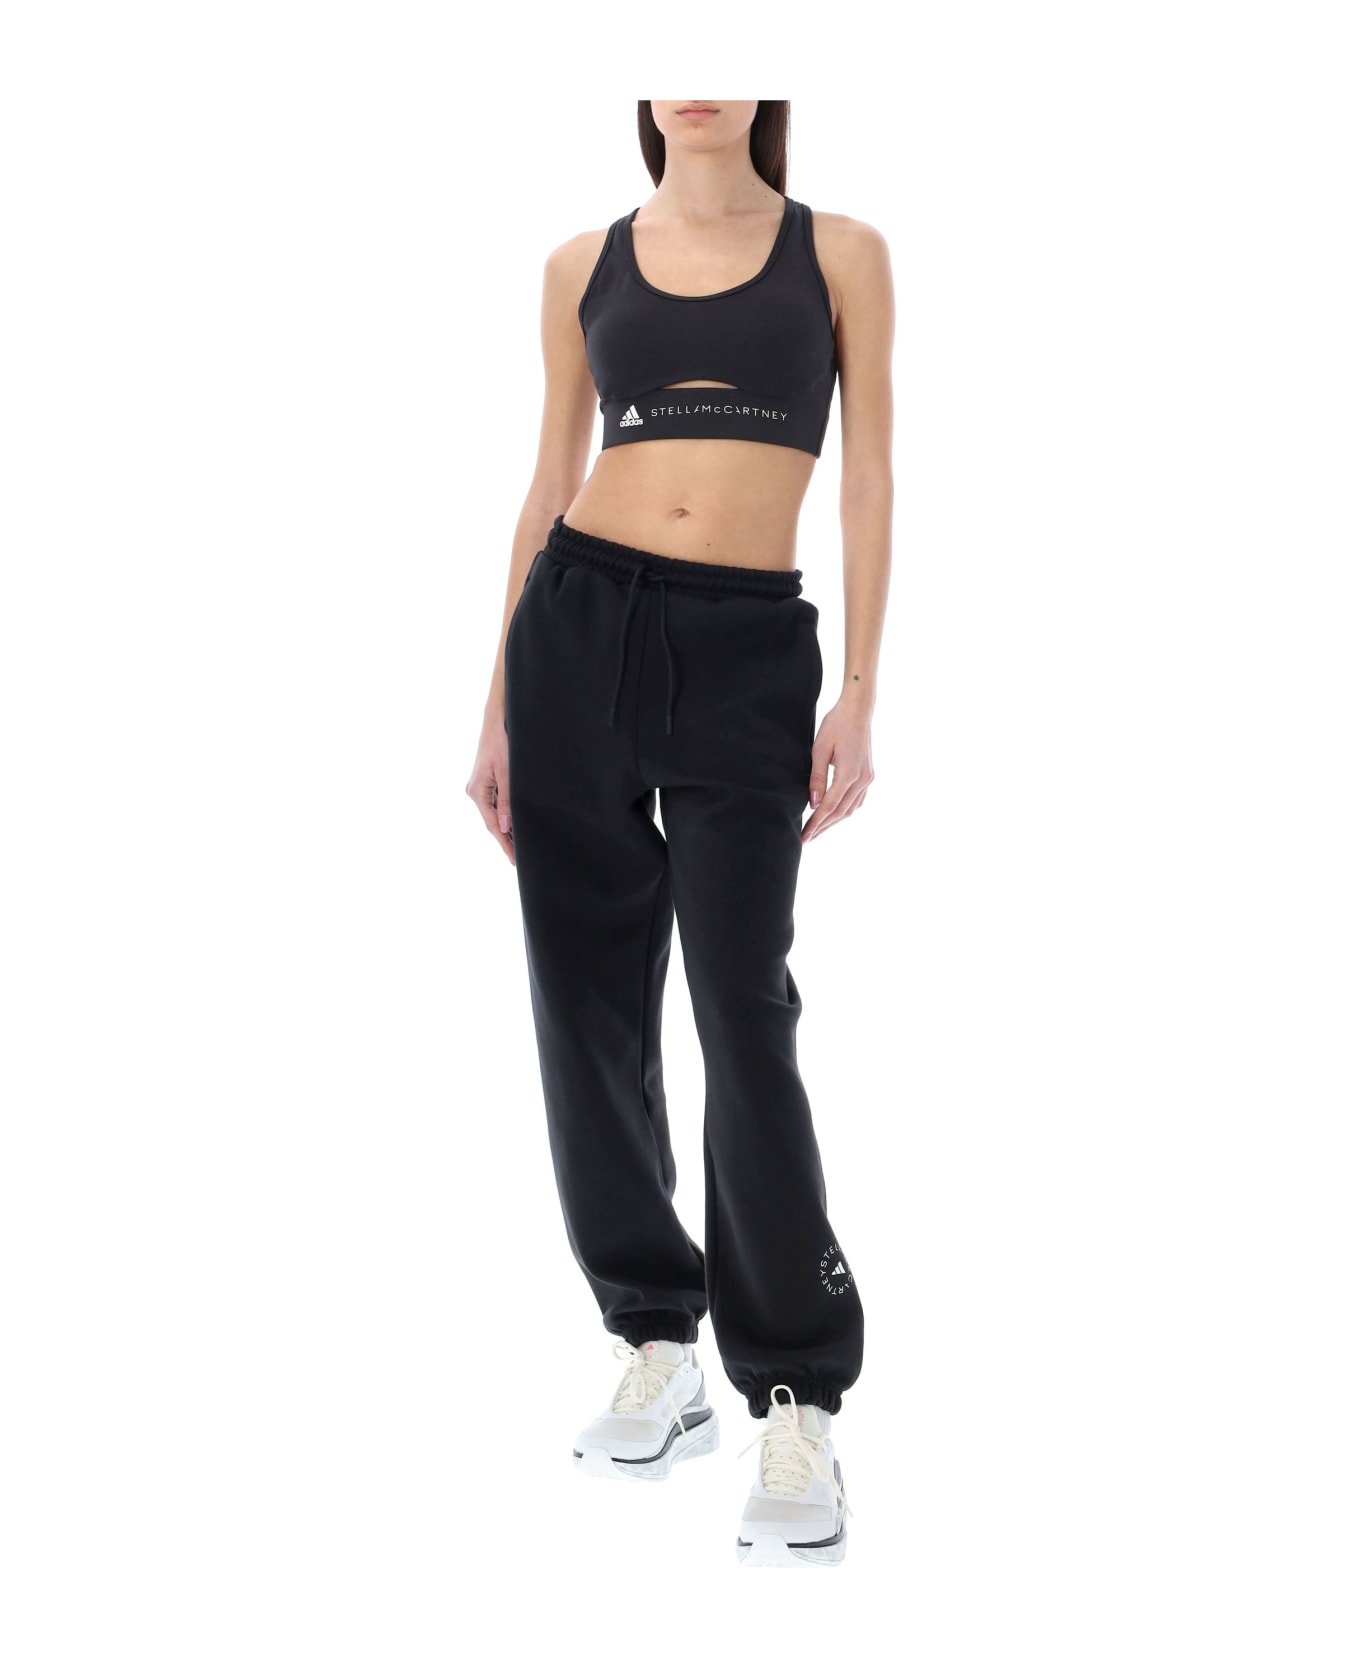 Adidas by Stella McCartney Truestrength Yoga Medium Support Sports Bra - Black